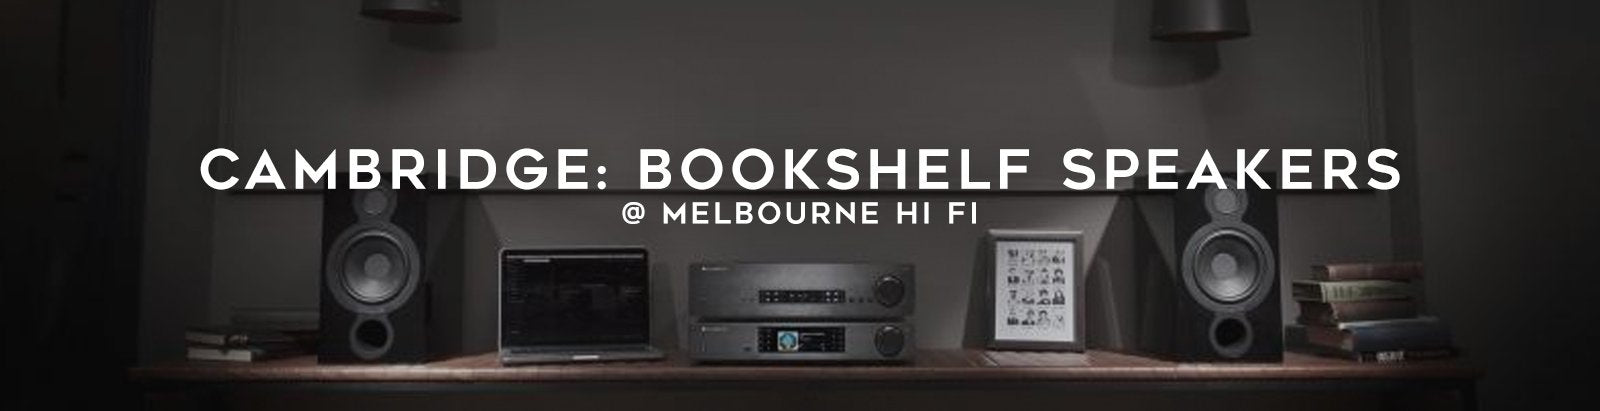 Cambridge Audio Bookshelf Speakers Melbourne Hi Fi